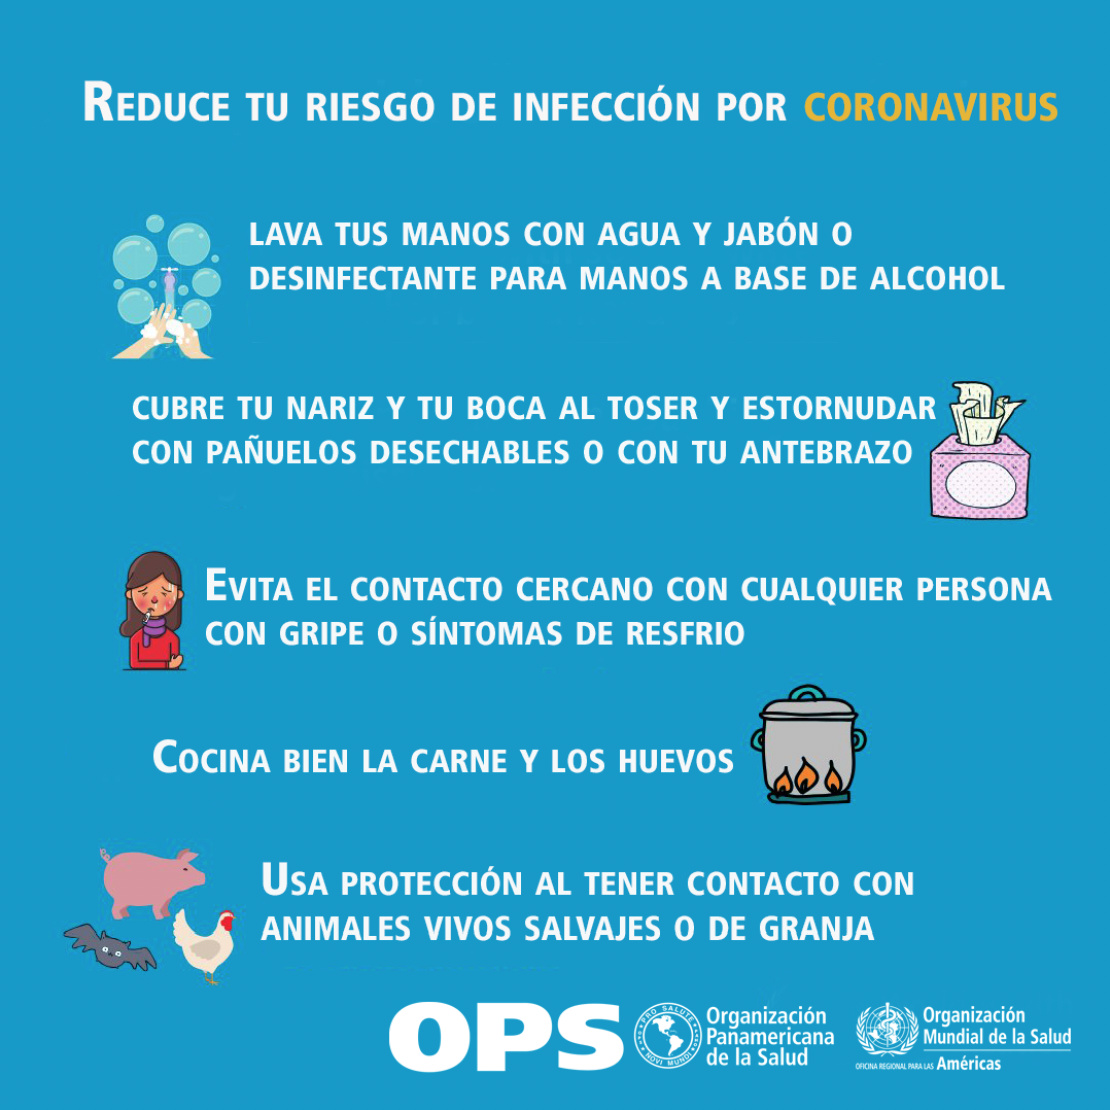 Reduce tu riesgo de infeccin por coronavirus